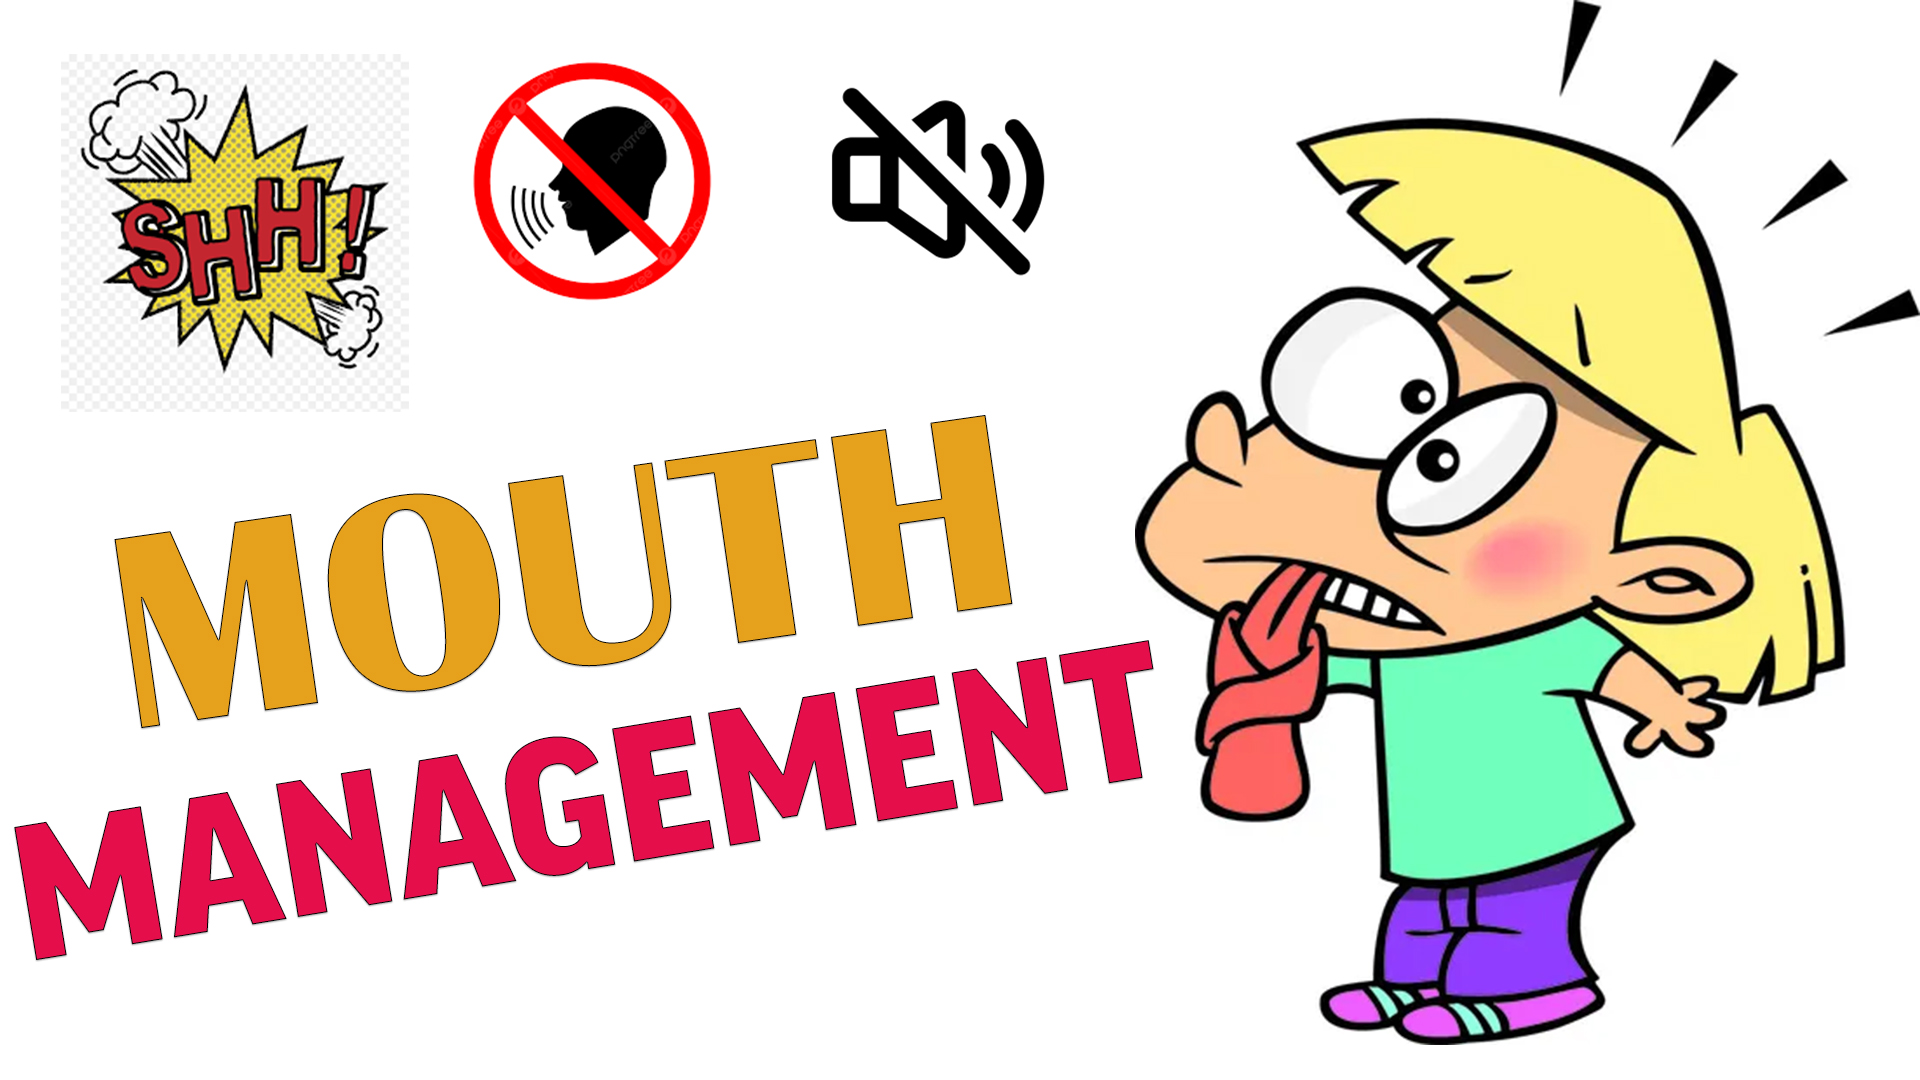 Mouth Management - Criticizing